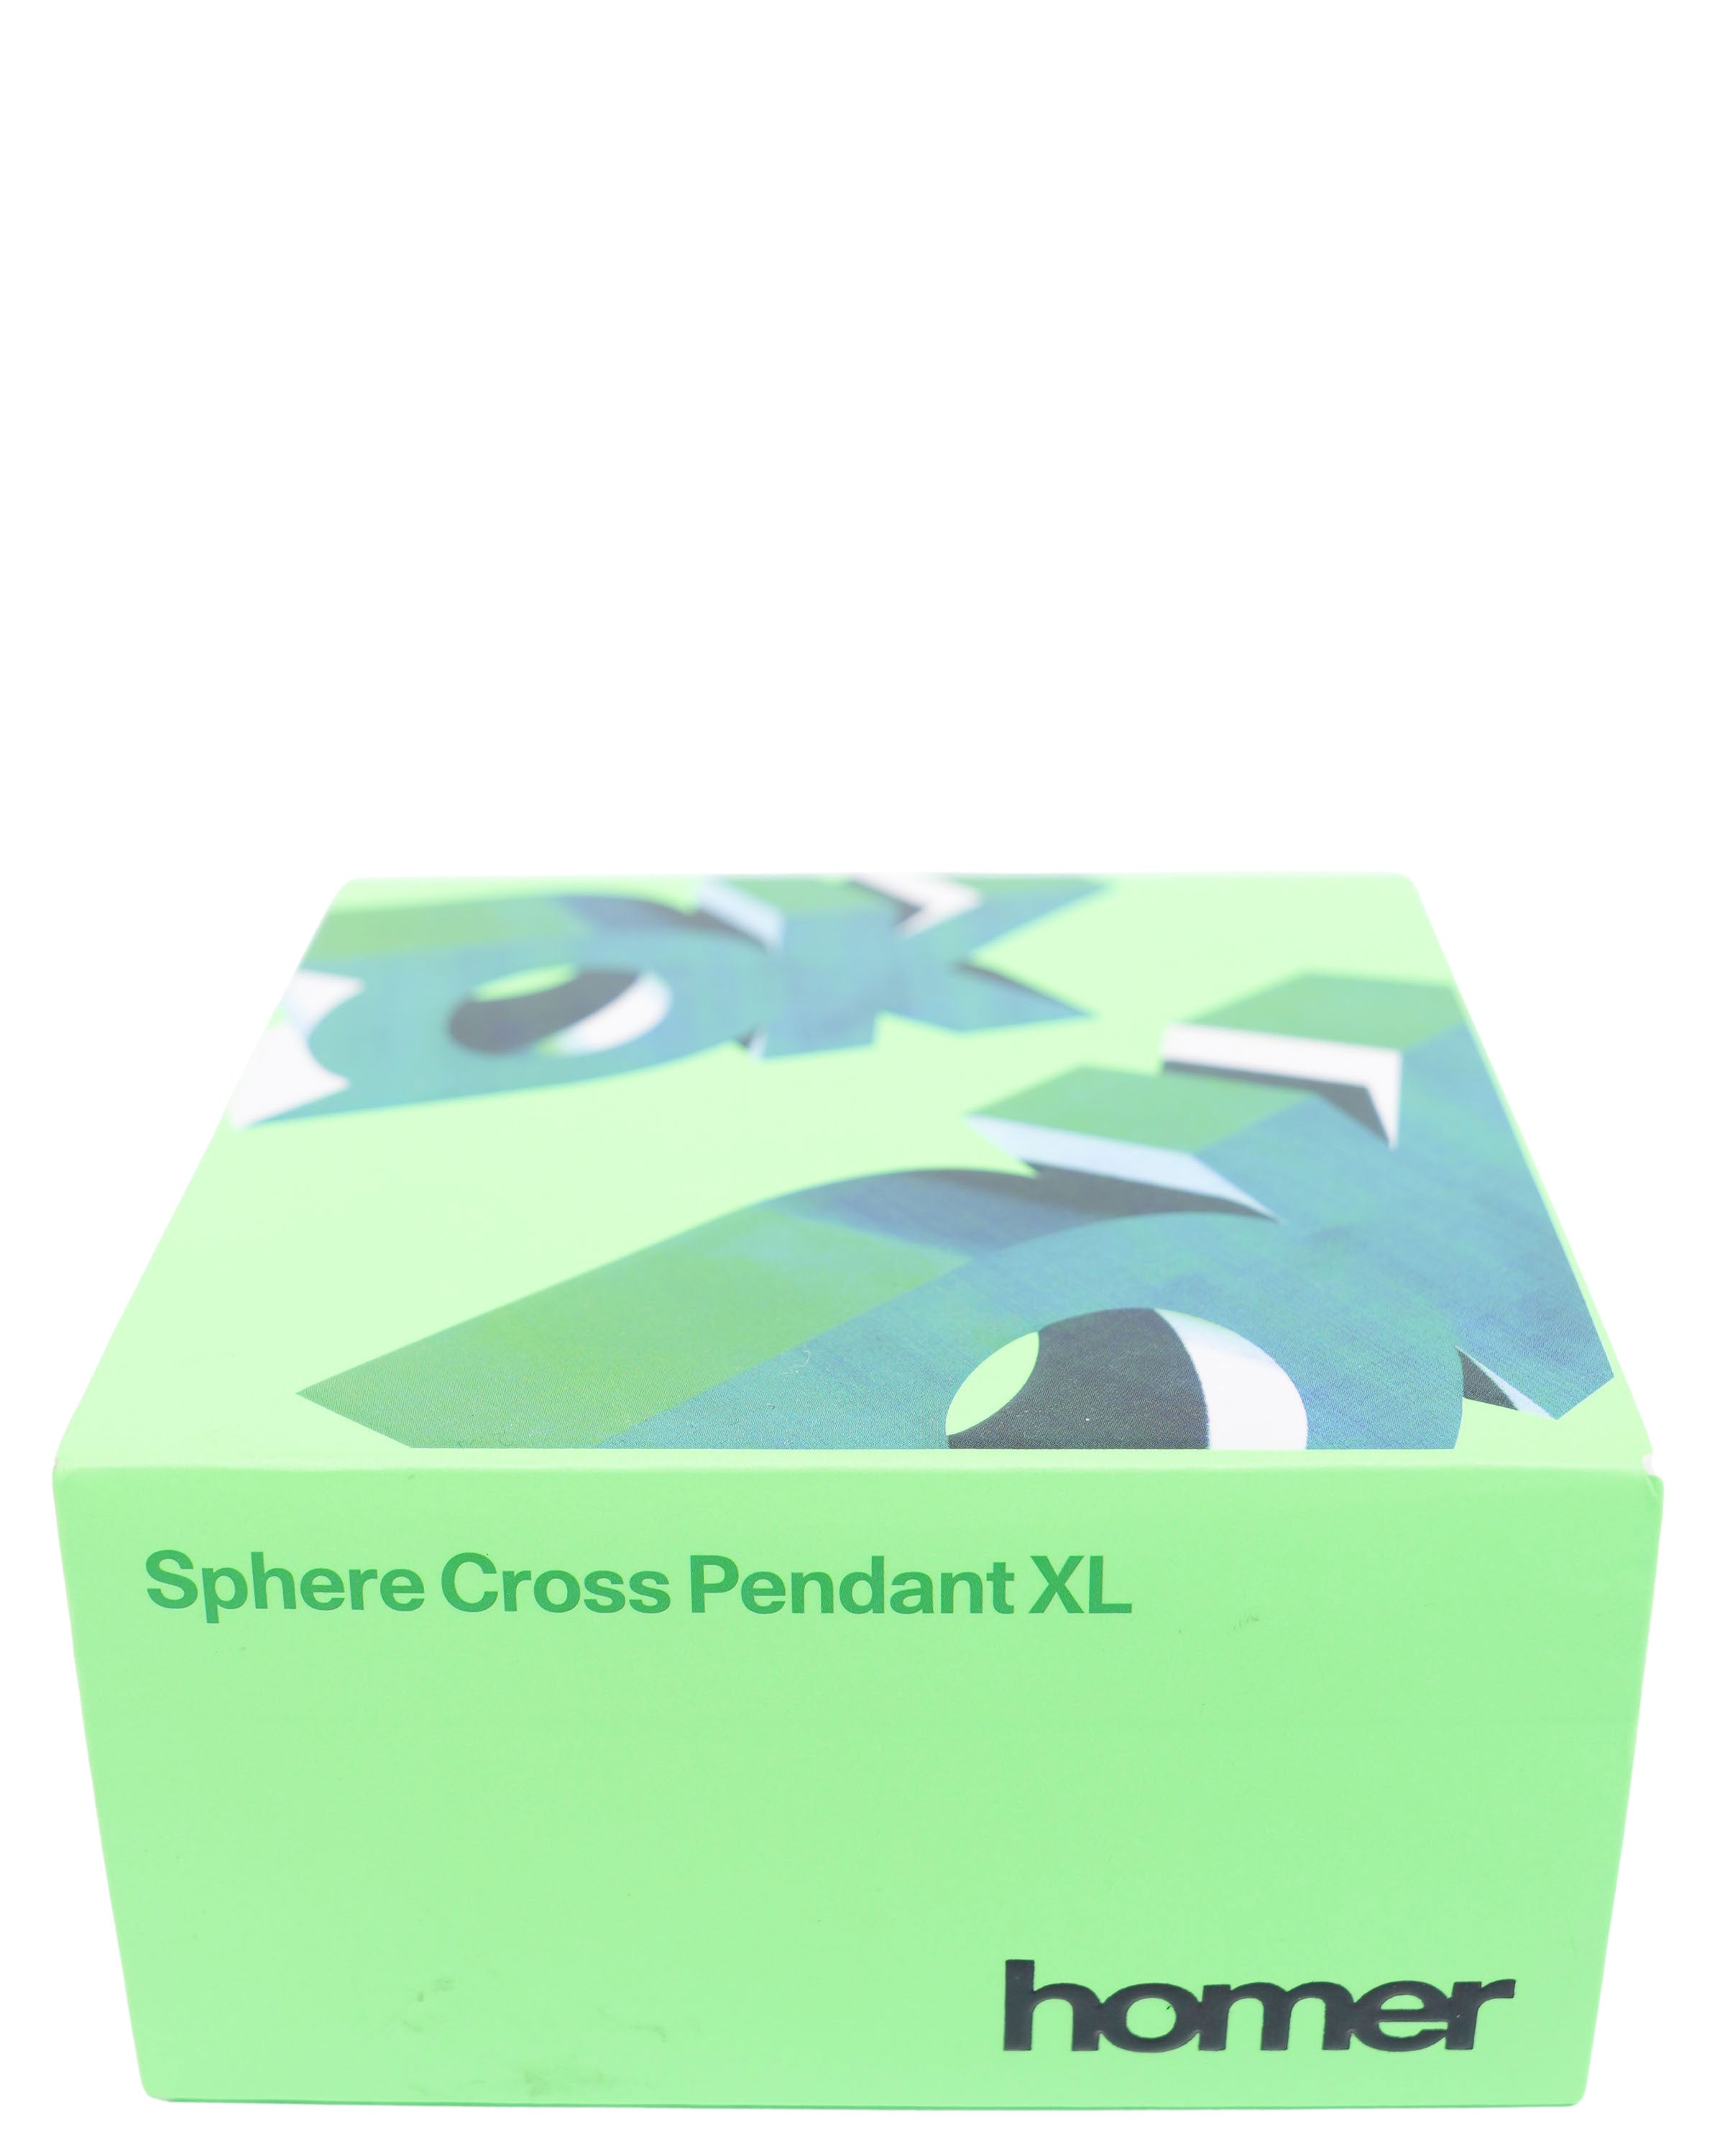 Sphere Cross Pendant XL